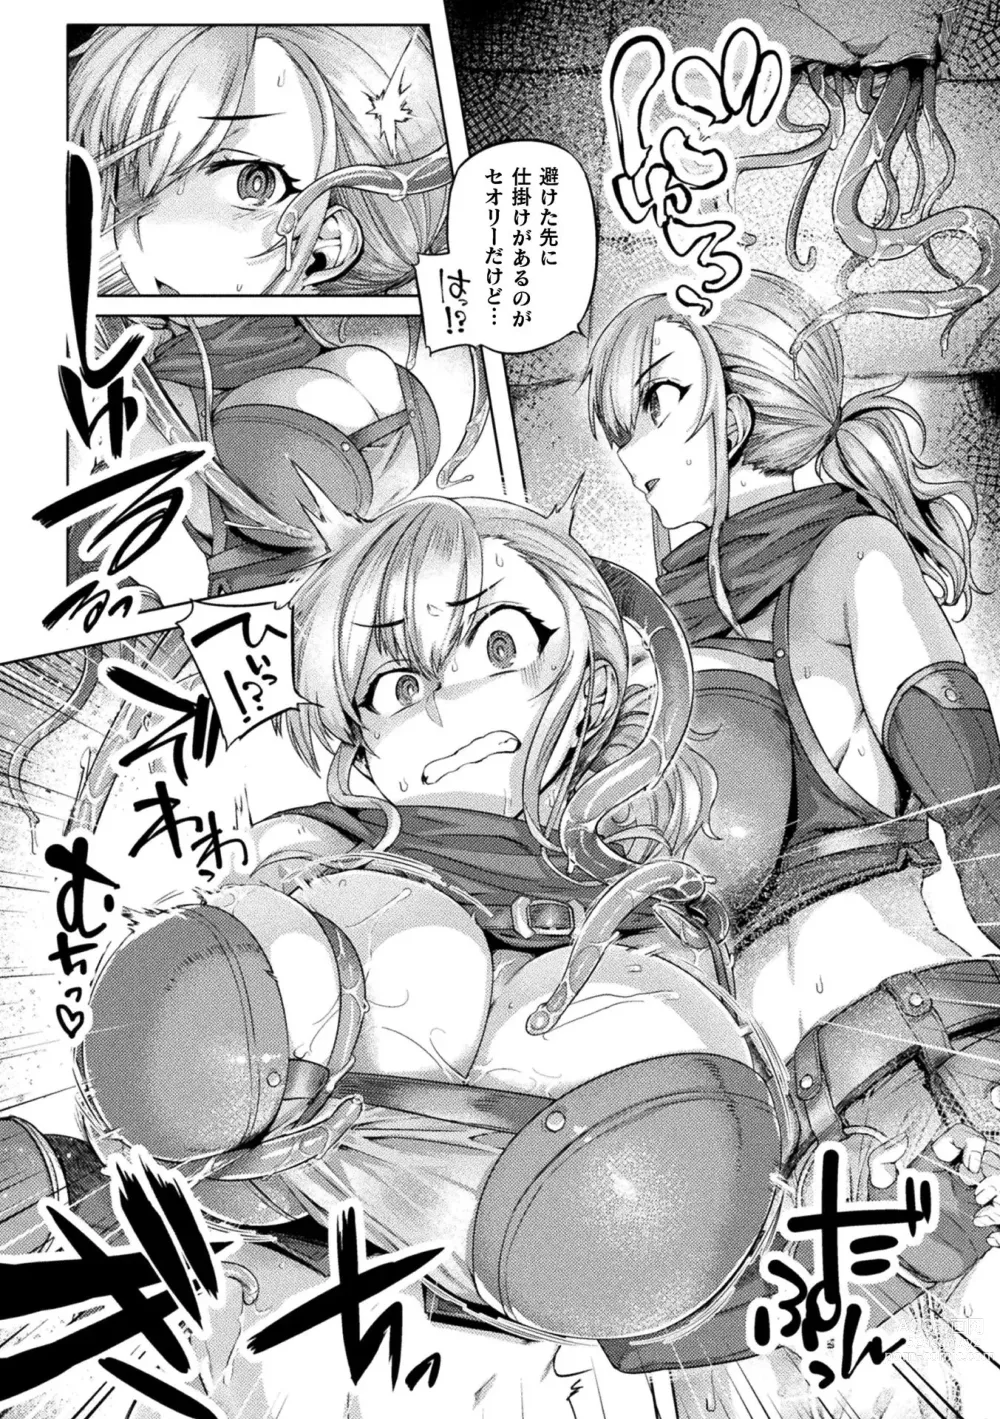 Page 8 of manga Kusshita Otome ga Ochiru Koro - When a surrendered maiden becomes sexually degraded